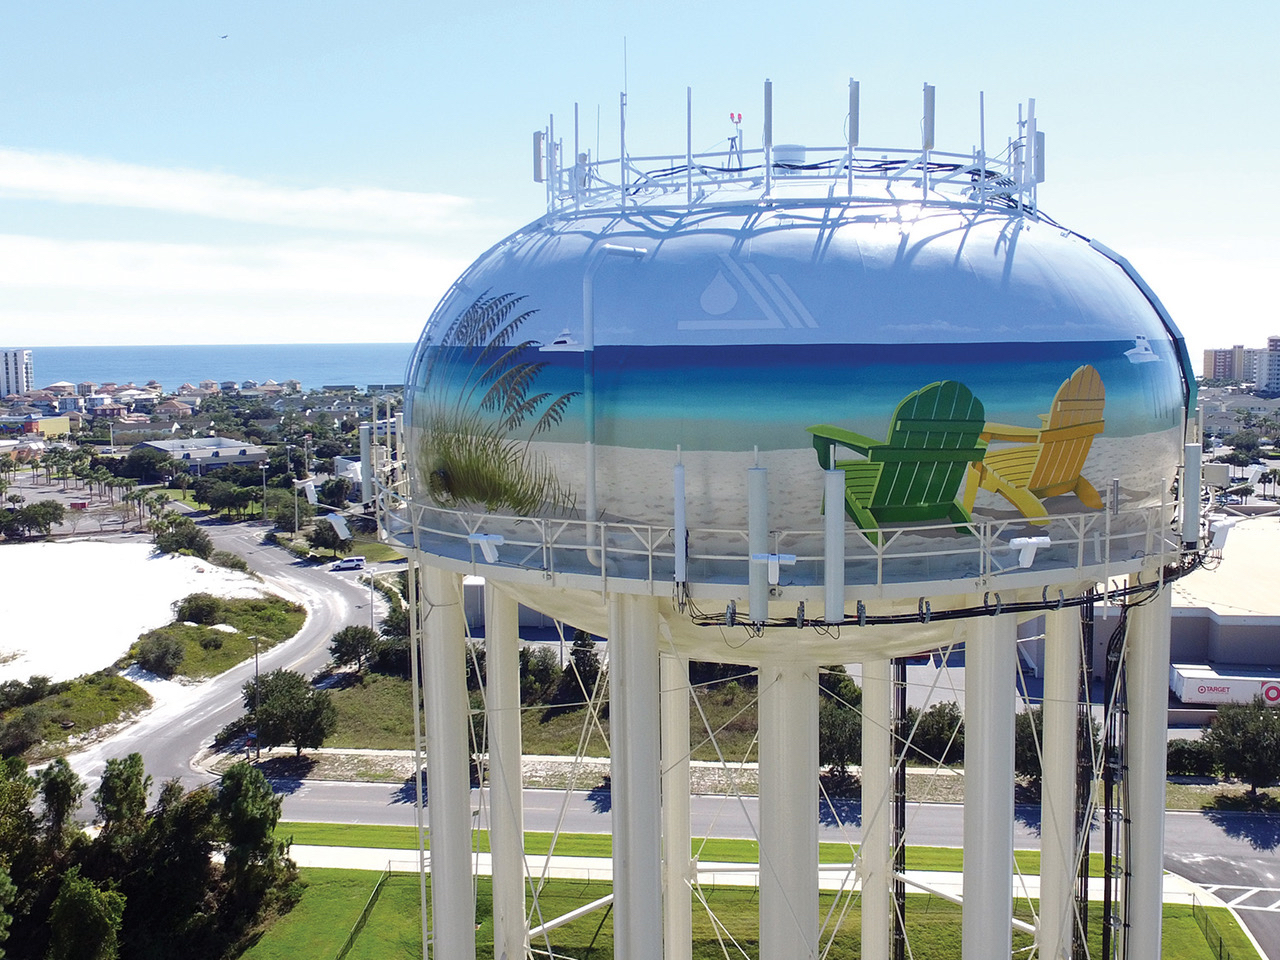 Last year’s winning entry in Destin, Florida, was a 500,000-gallon legged tank that featured a beach scene by muralist Eric Henn